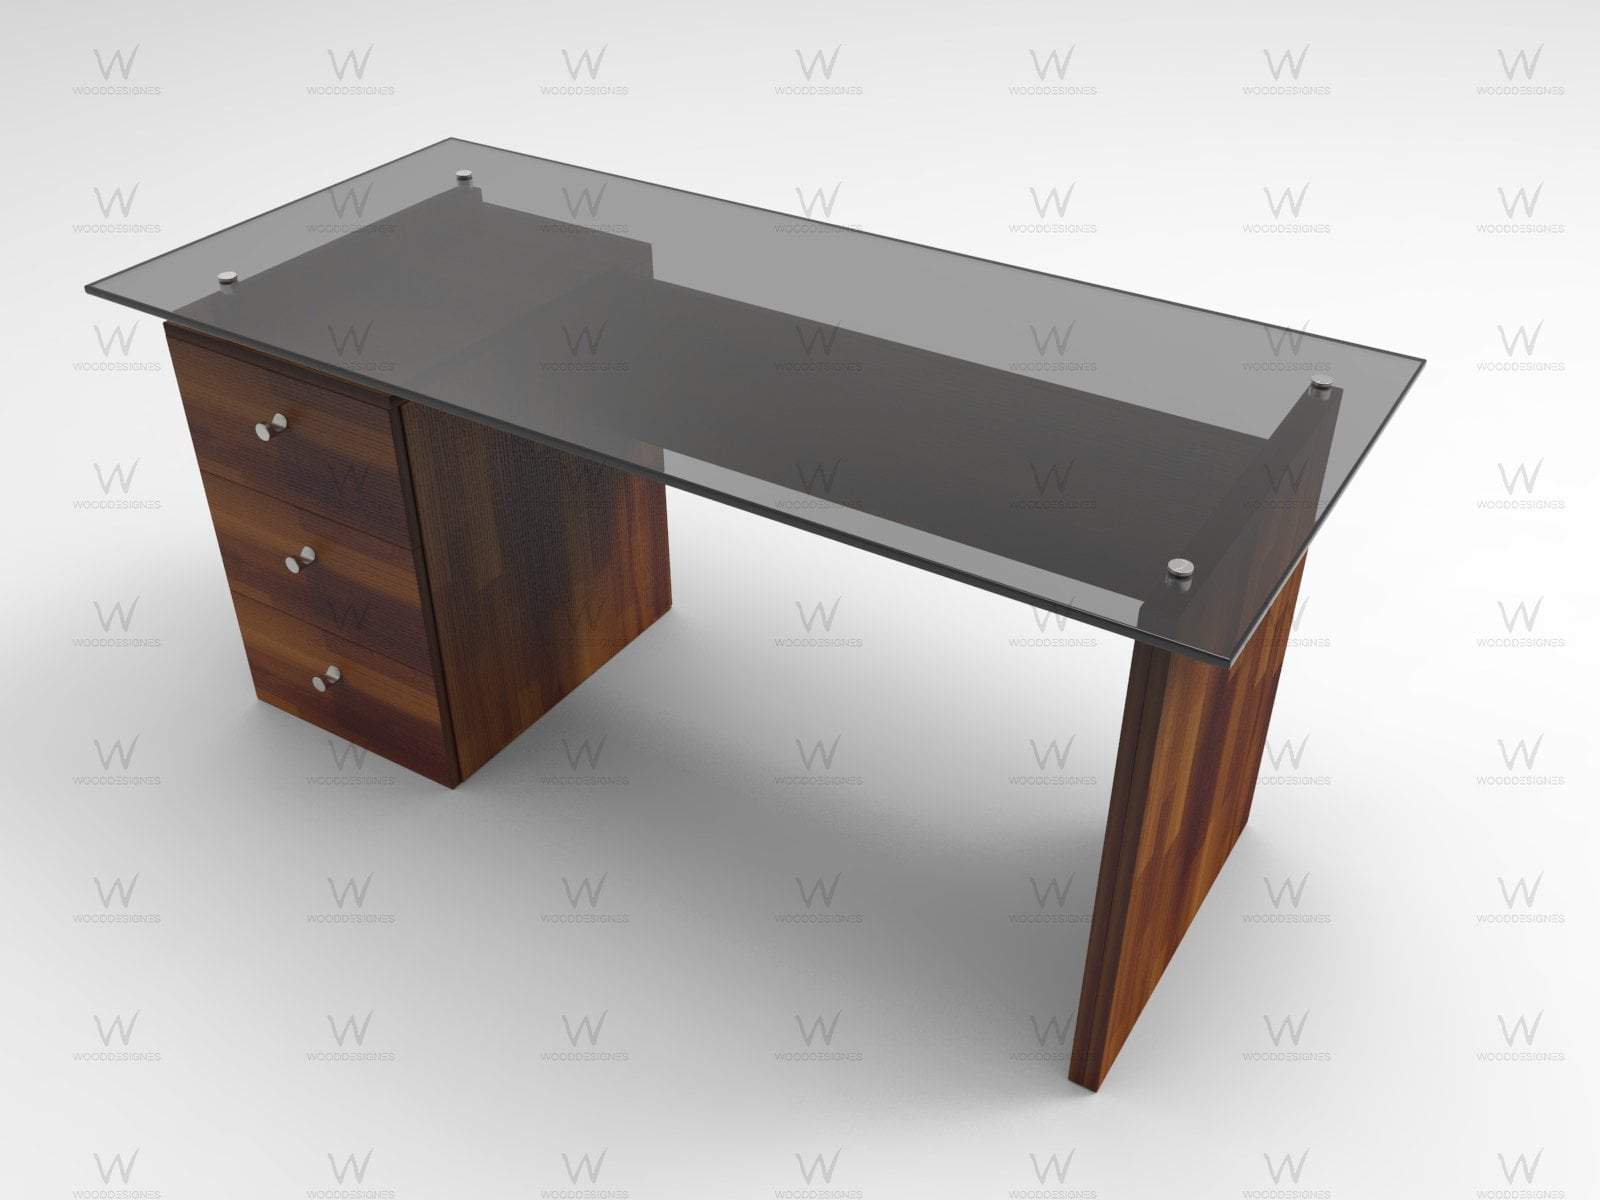 arthur-glass-office-table-13904501571681 HomeOfficeGarden Home Office Garden | HOG-HomeOfficeGarden | HOG